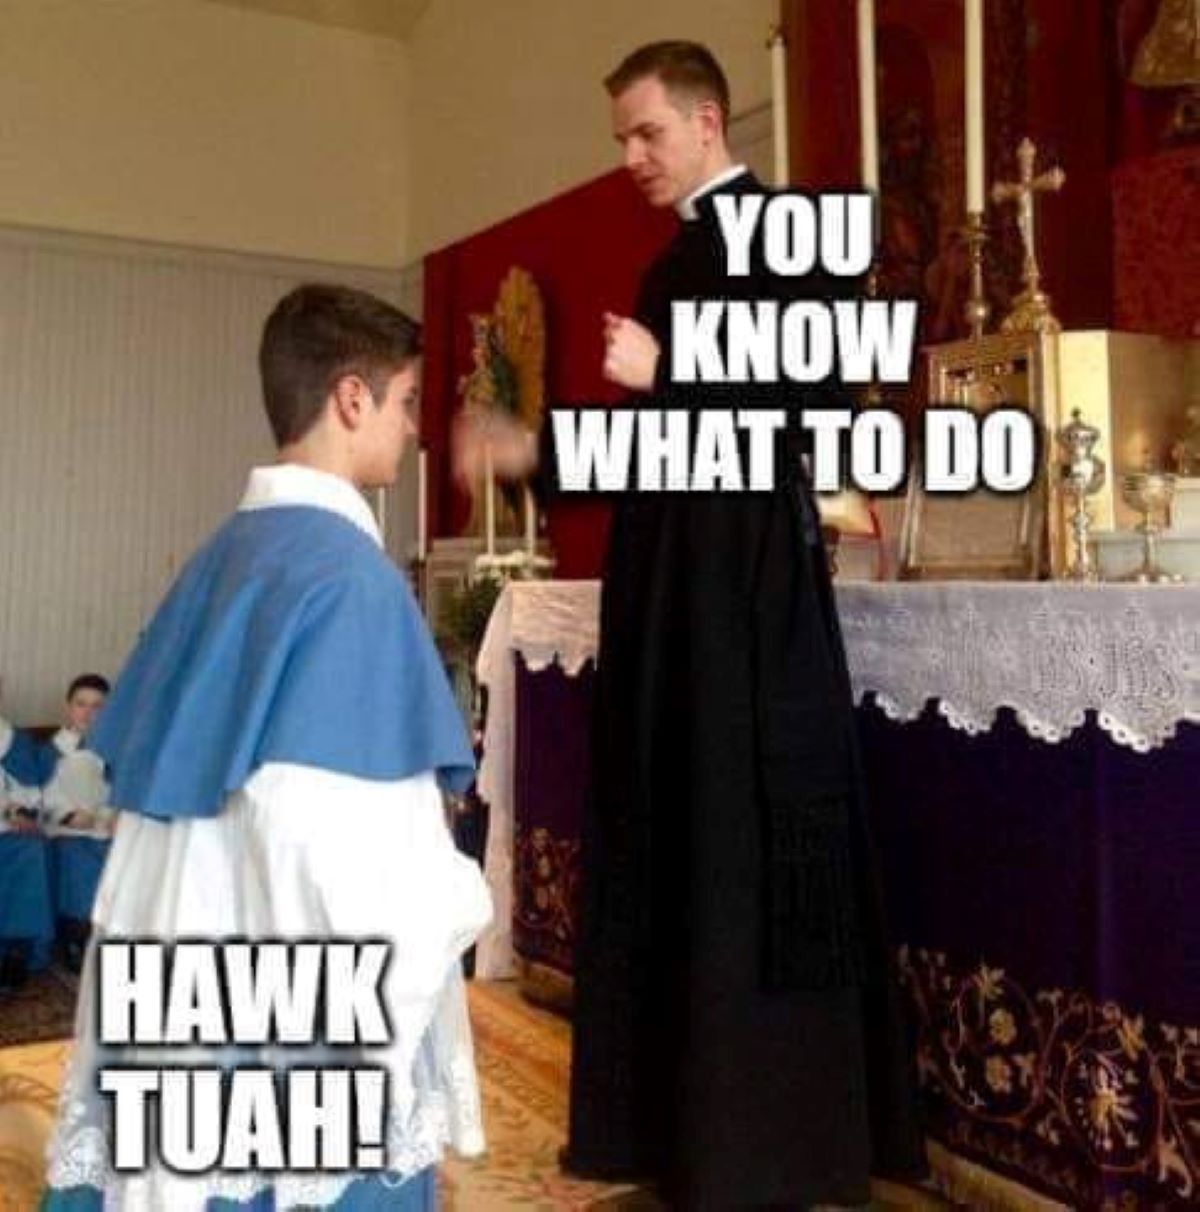 priest altar boy - Hawk Tuah! You Know What To Do